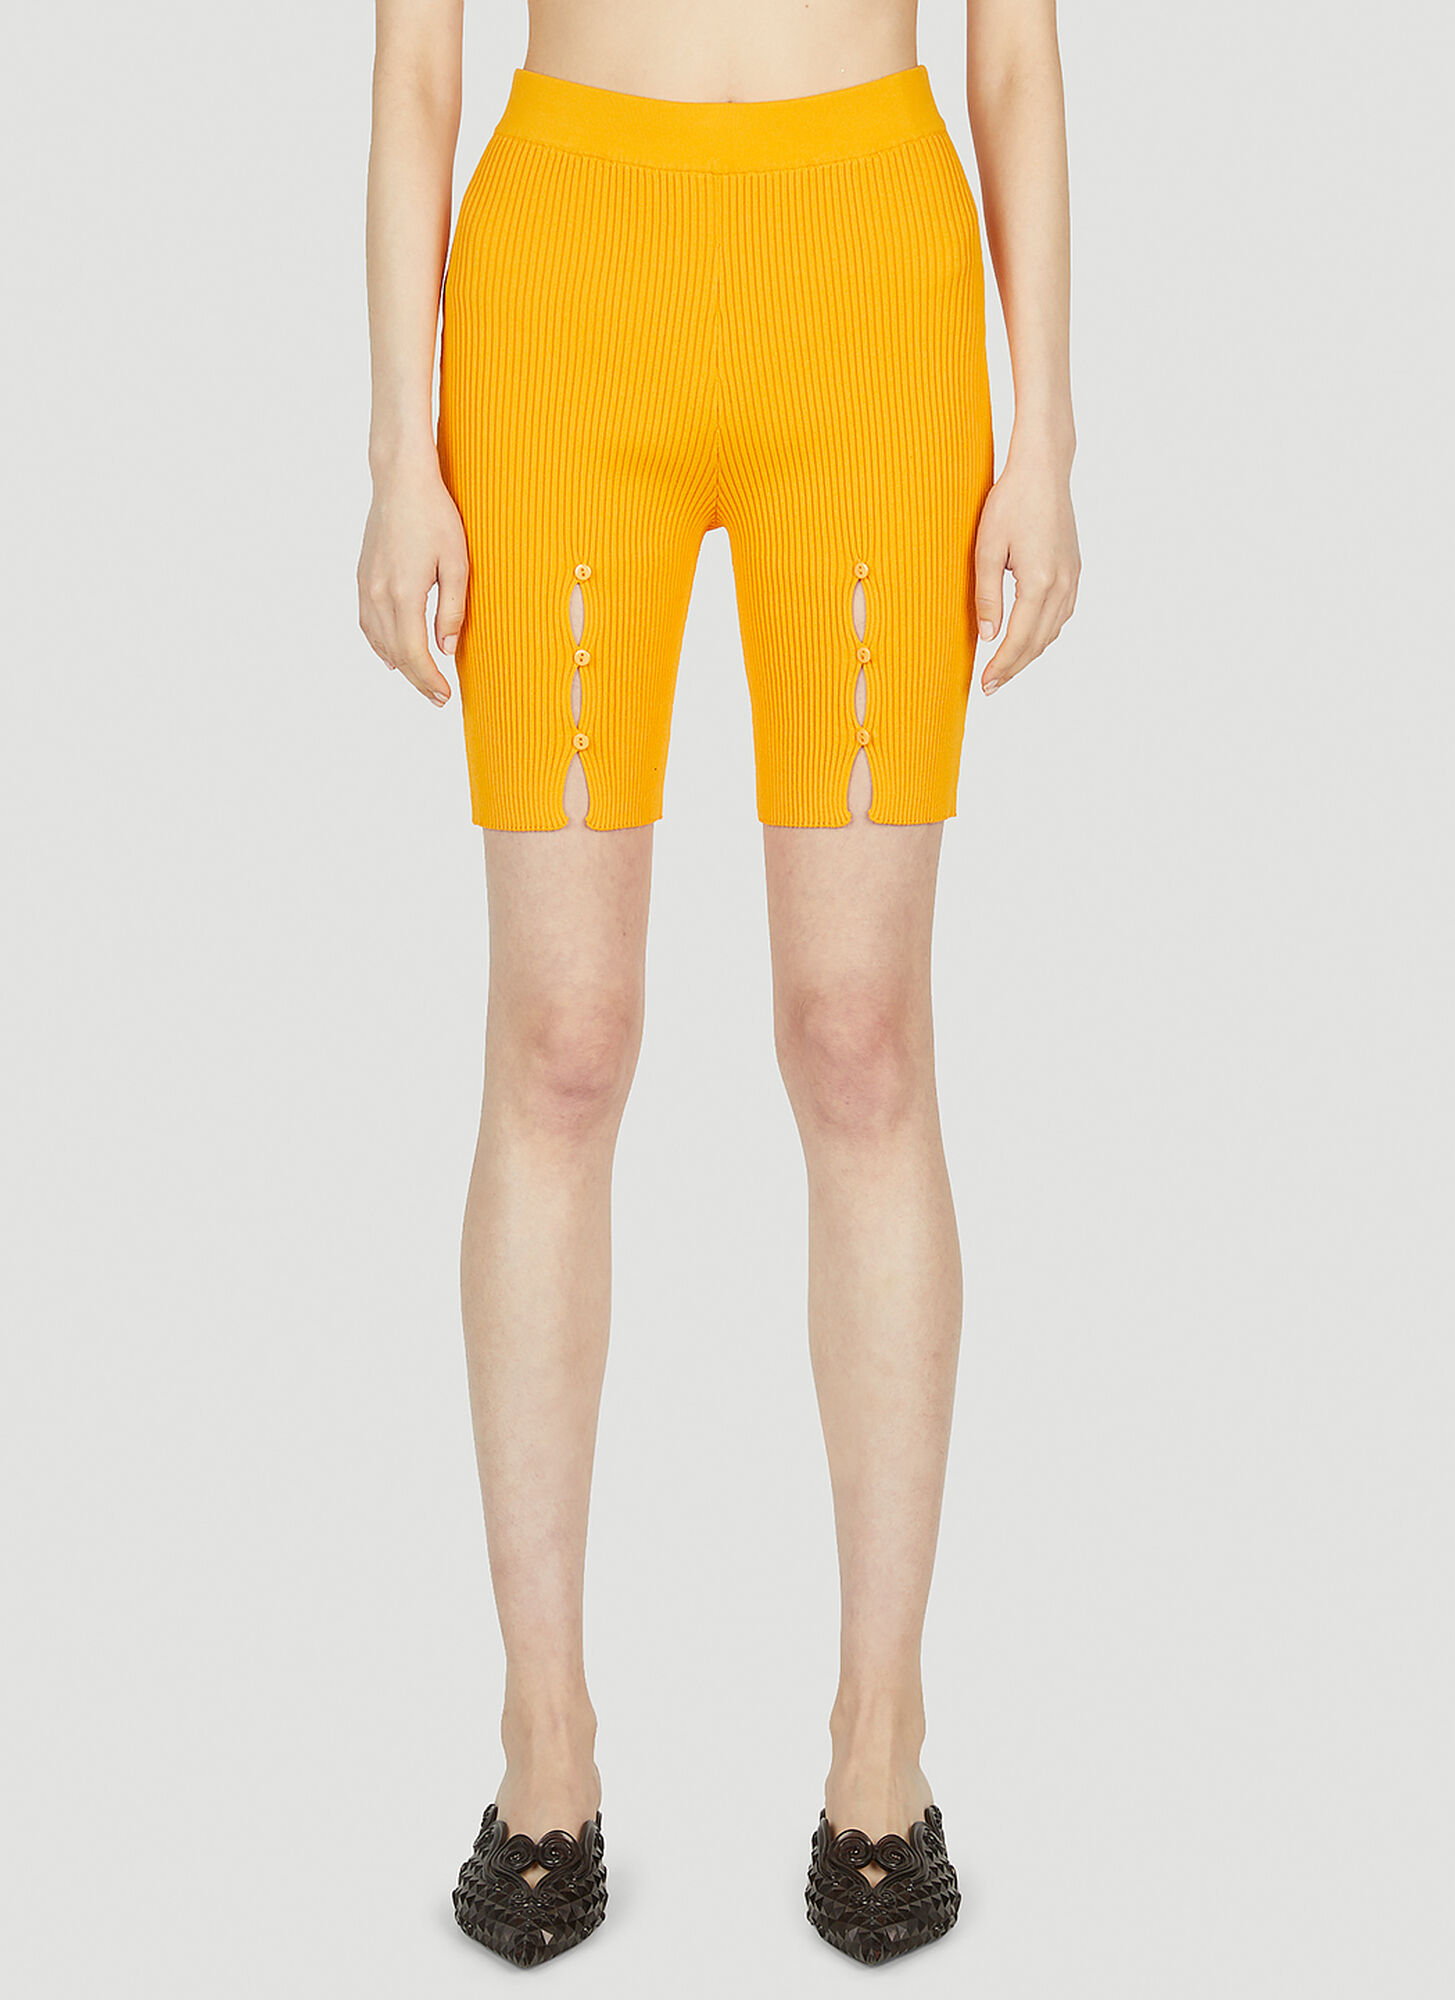 Ester Manas Knit Biker Shorts In Orange